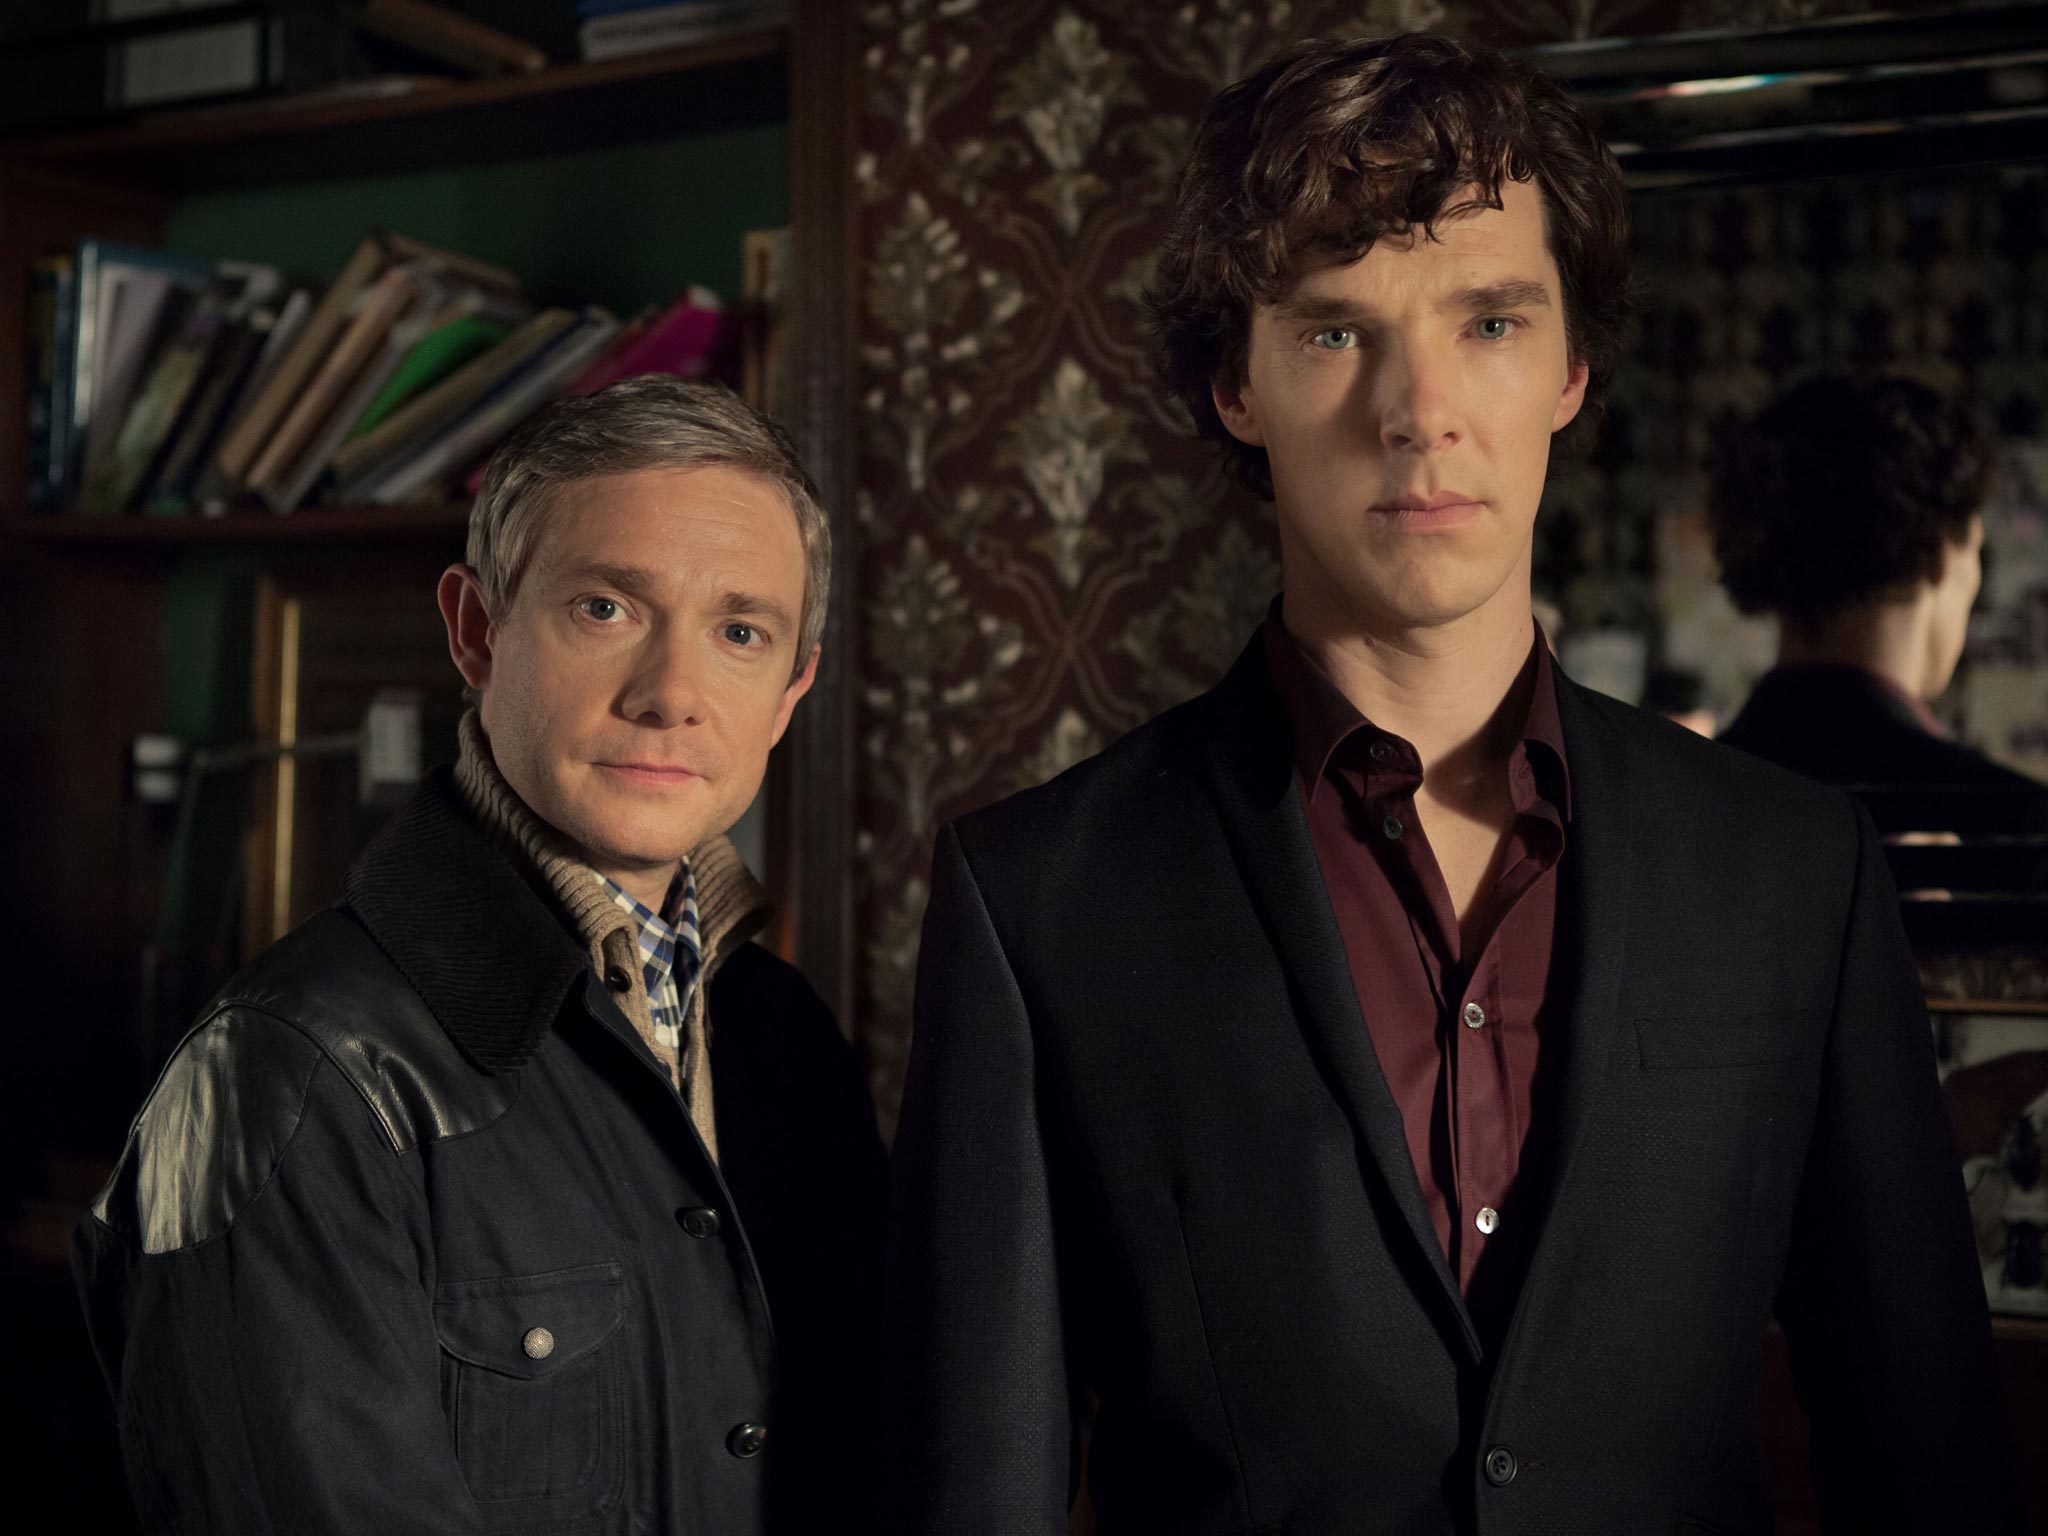 Martin Freeman and Benedict Cumberbatch in 'Sherlock'